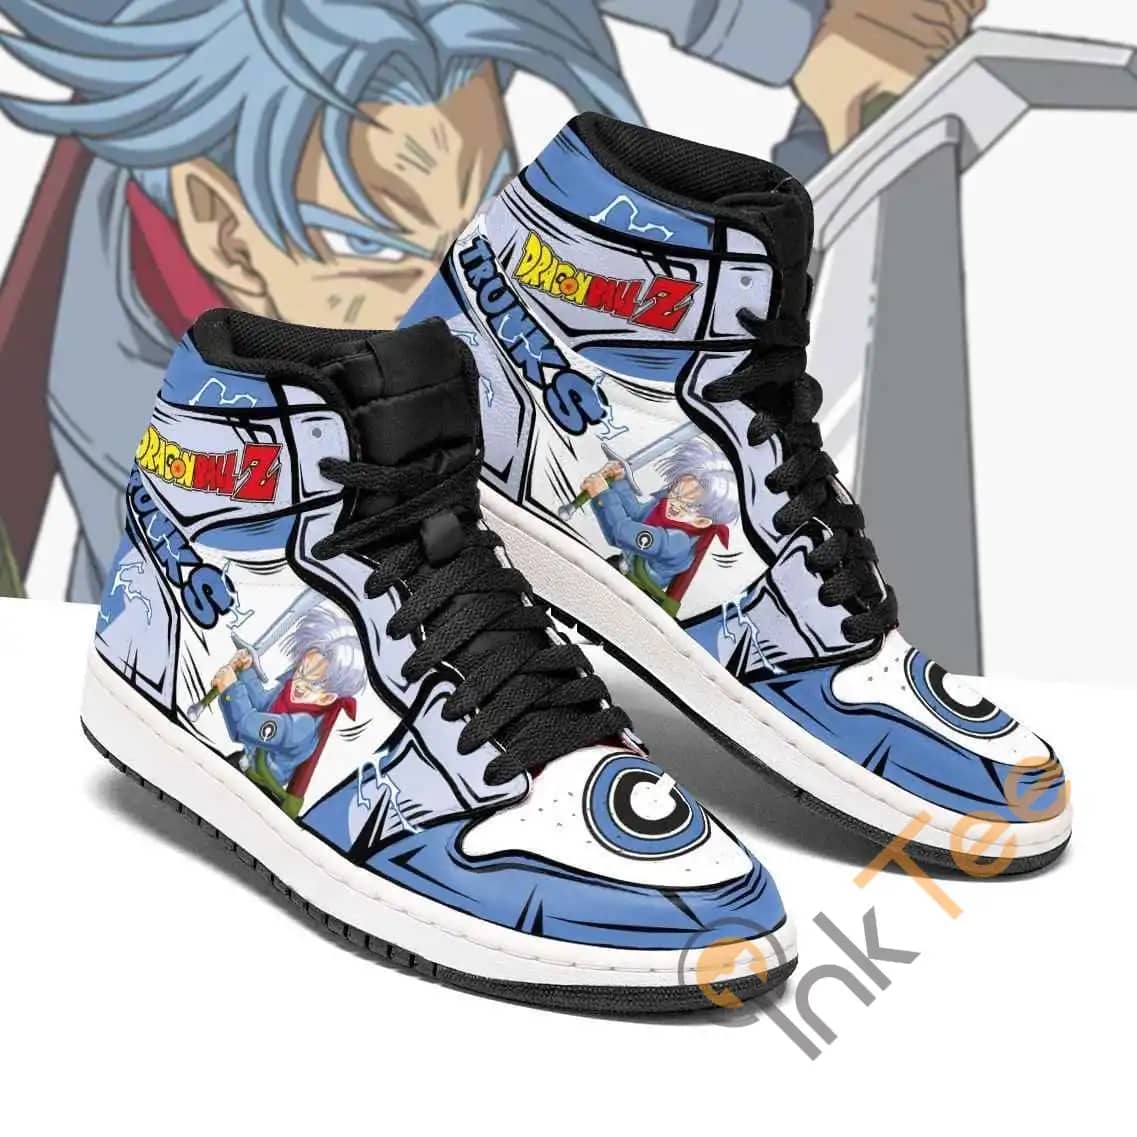 Trunks Dragon Ball Z Anime Sneakers Air Jordan Shoes